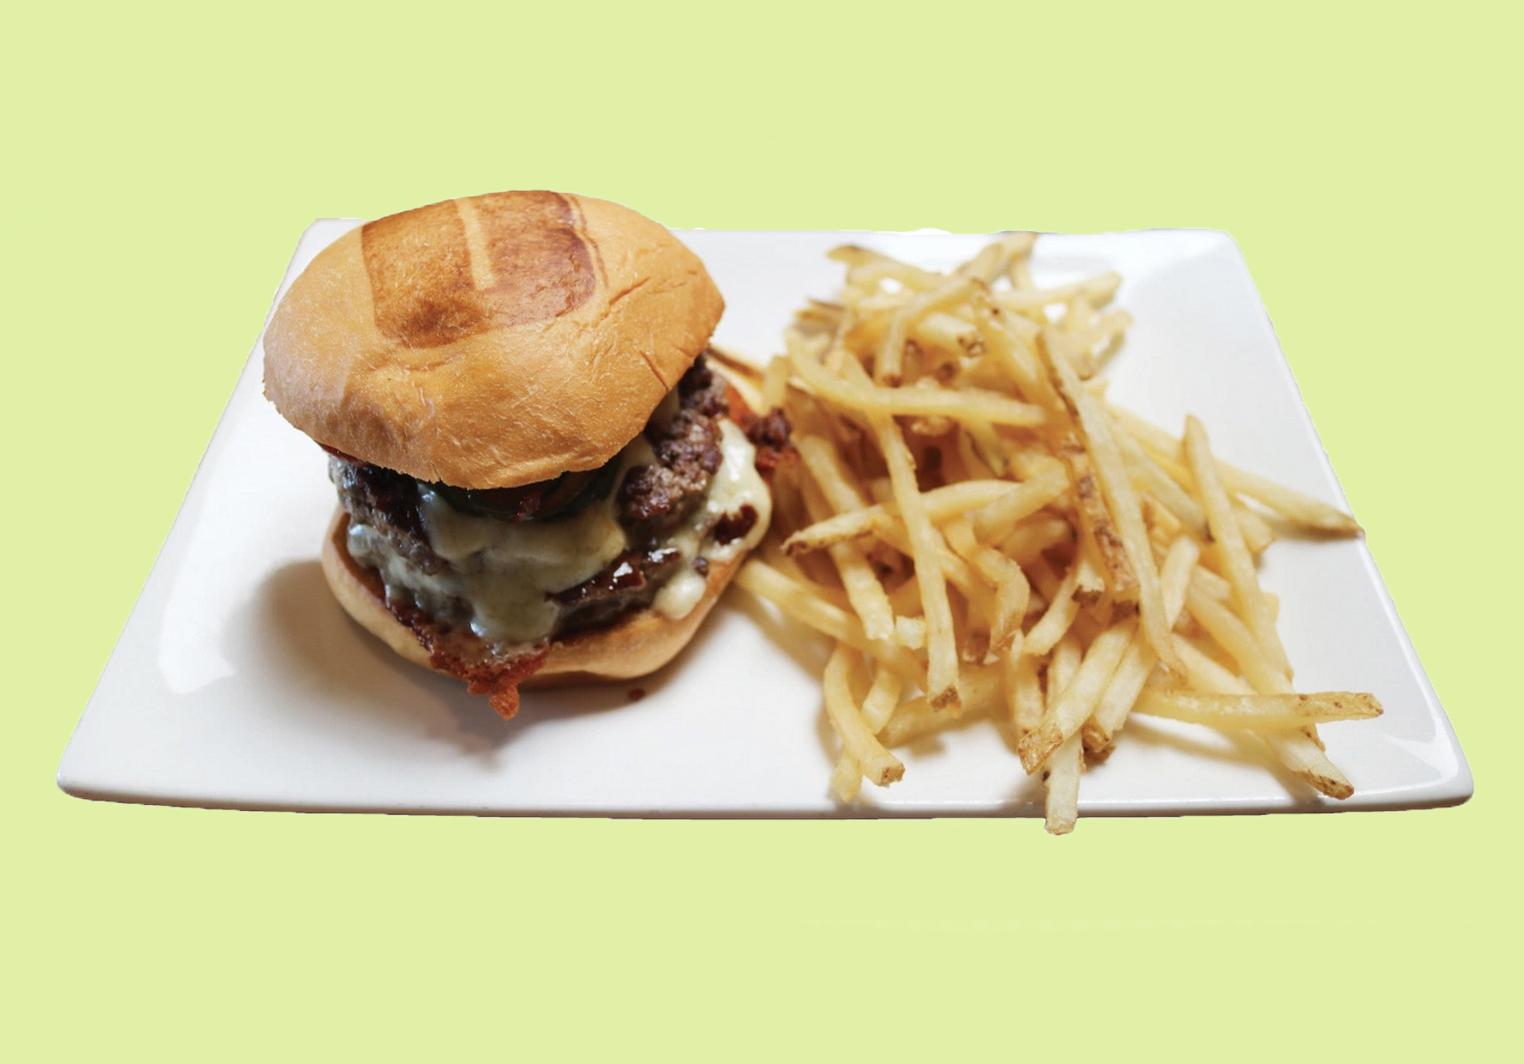 PA+Burgers%3A+Verde+reviews+popular+burgers+in+Palo+Alto